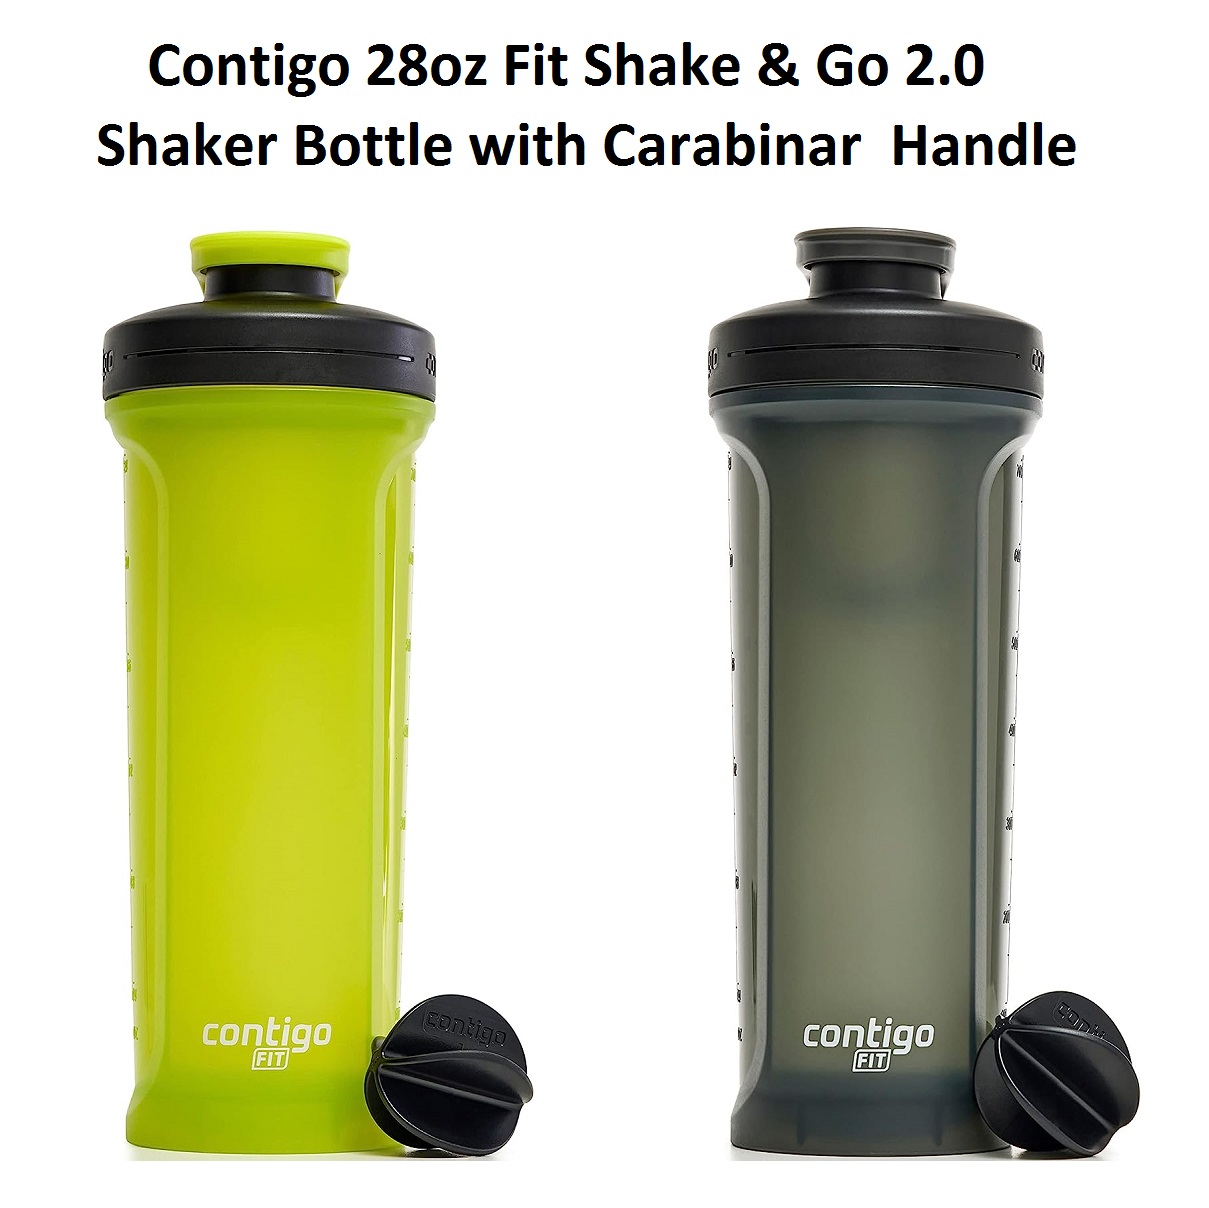 Contigo Fit Shake & Go 2.0 Plastic Shaker Water Bottle